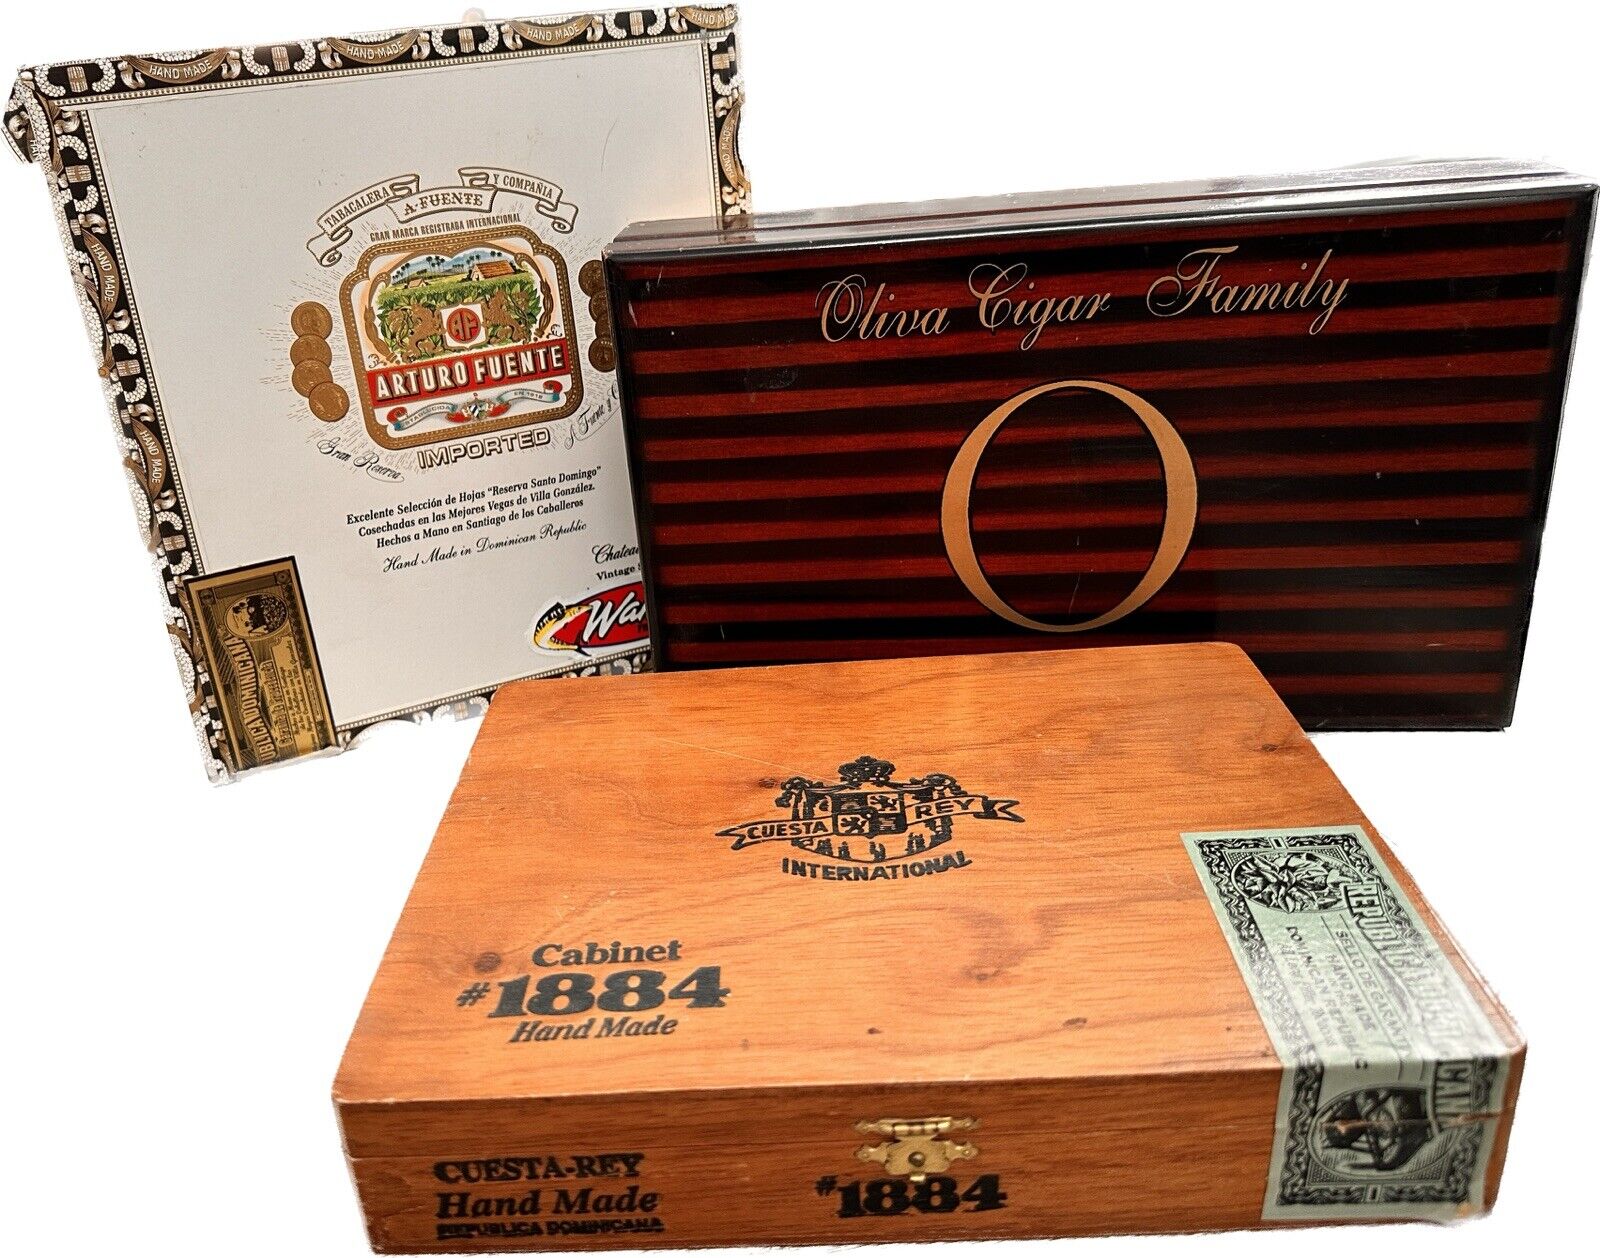 Mixed Lot Three Cigar Boxes Cuesta Rey, Arturo Fuente, Oliva Family